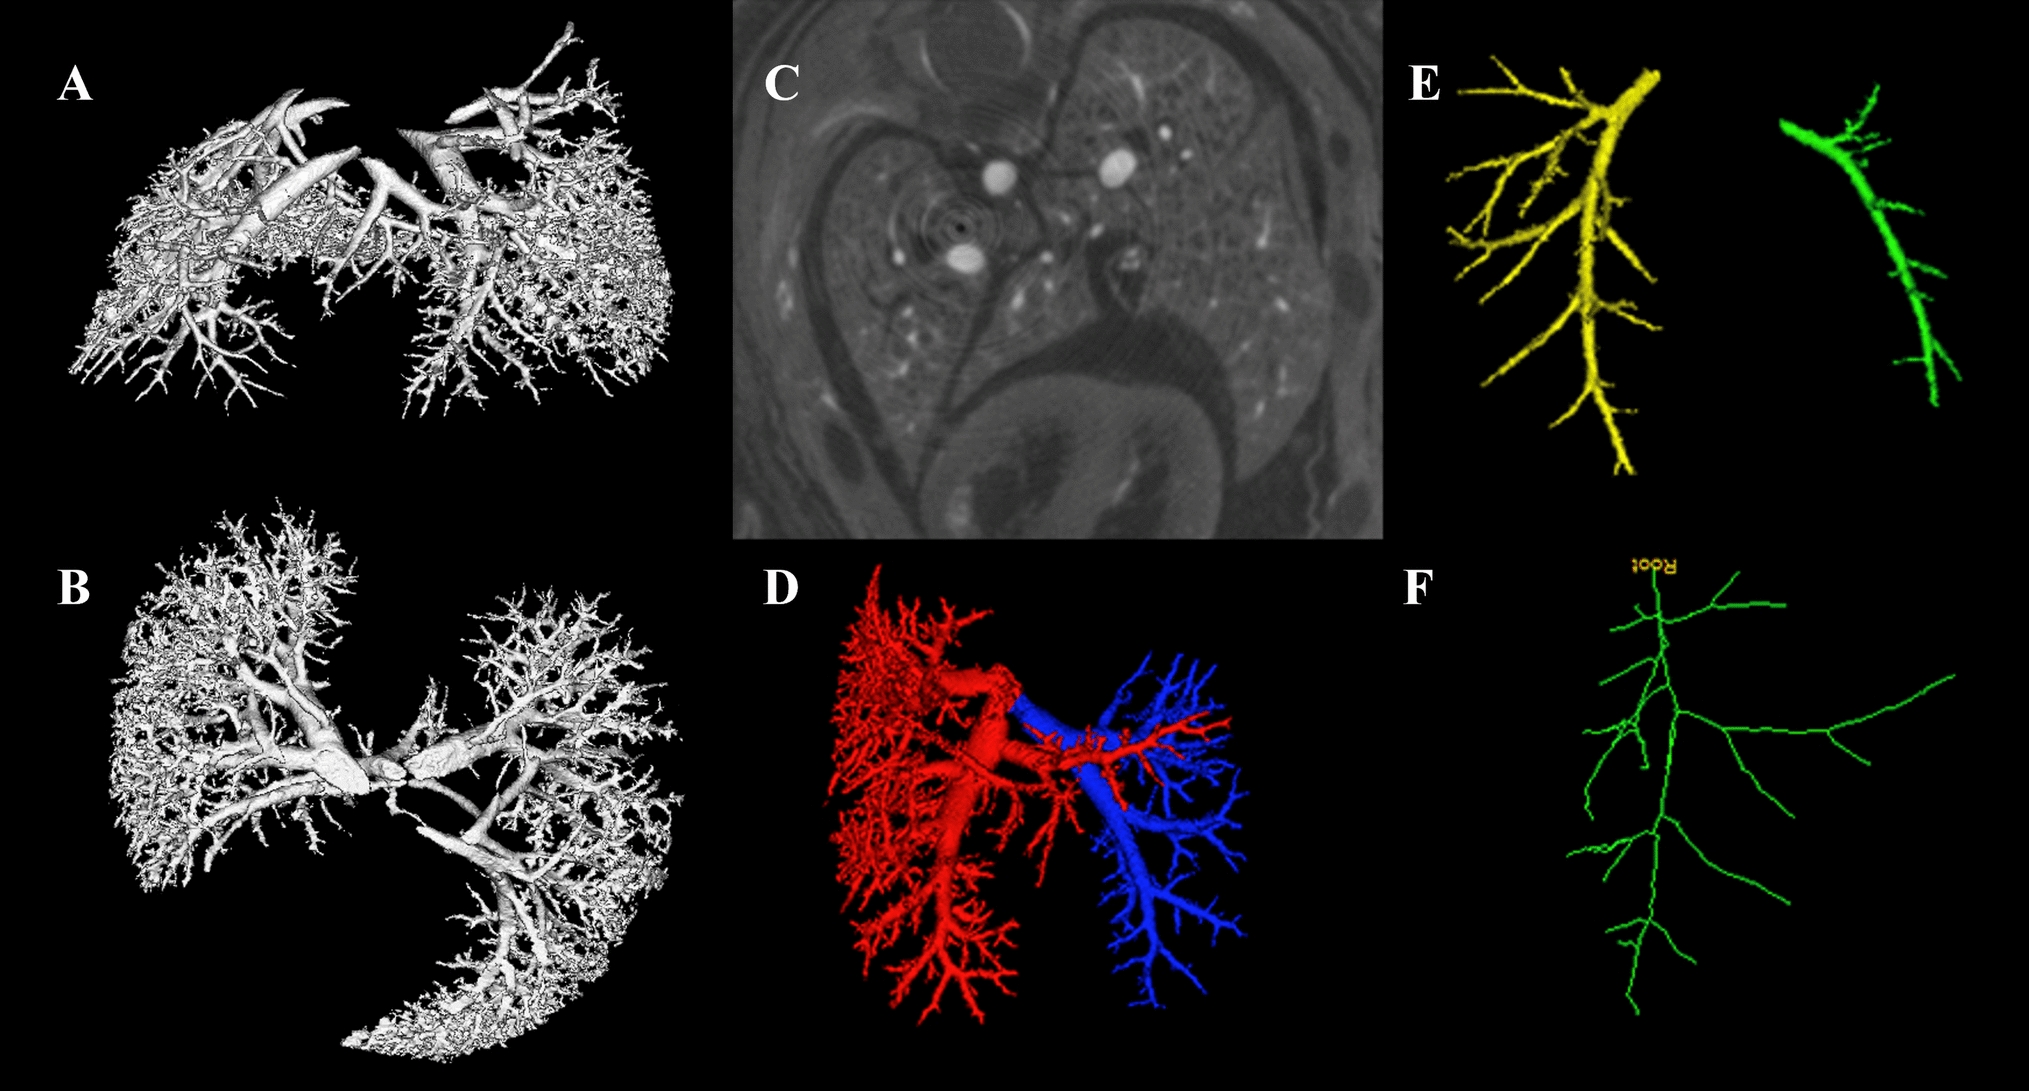 Pulmonary vasculature development in congenital diaphragmatic hernia: a novel automated quantitative imaging analysis